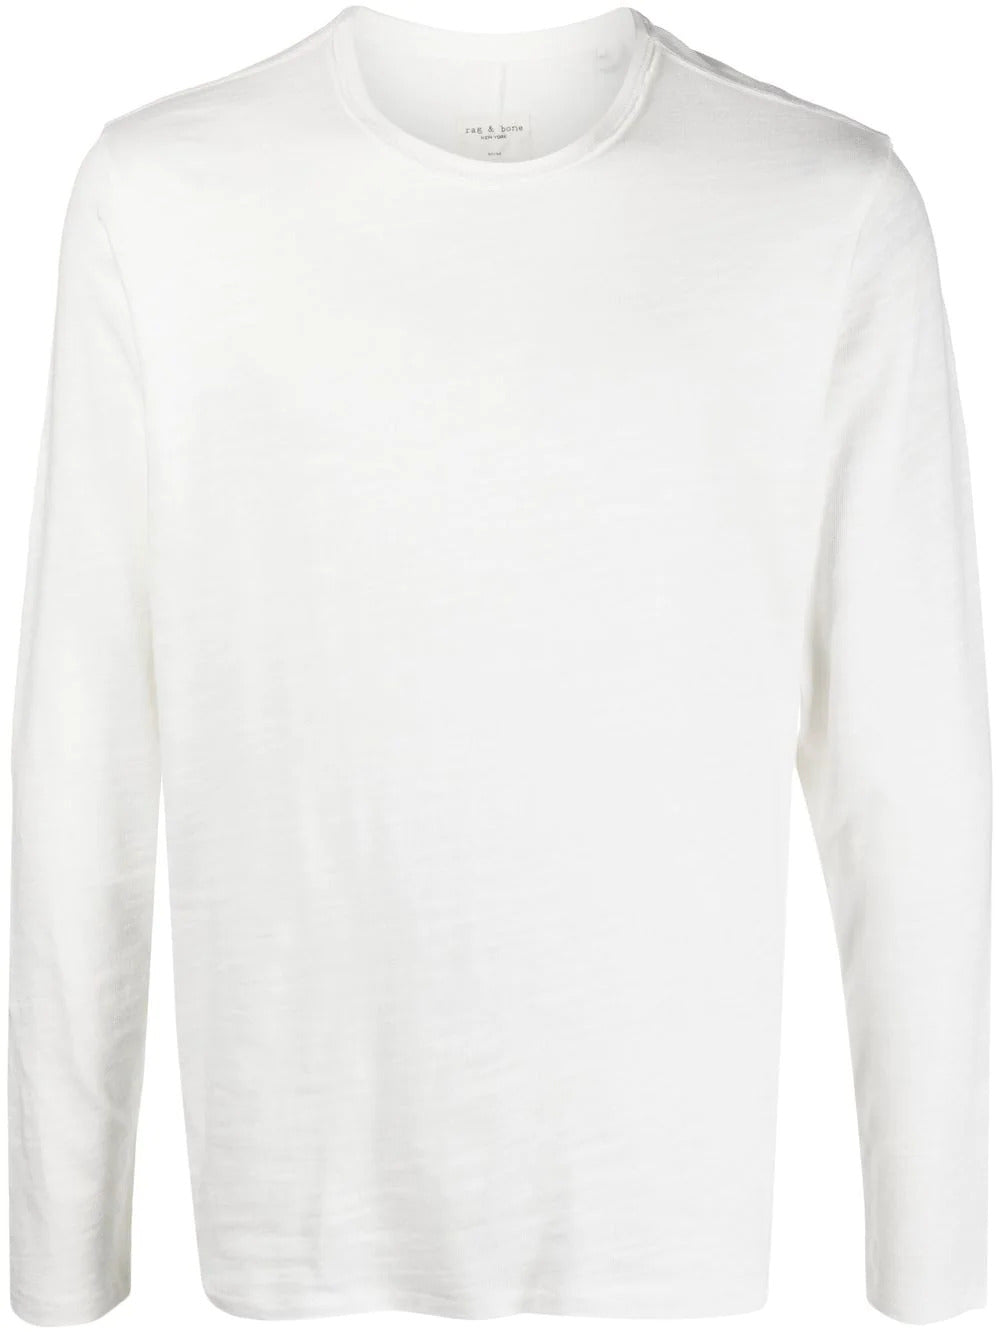 Shop Rag & Bone Men's White Knit Long Sleeve Cotton T-shirt Pullover